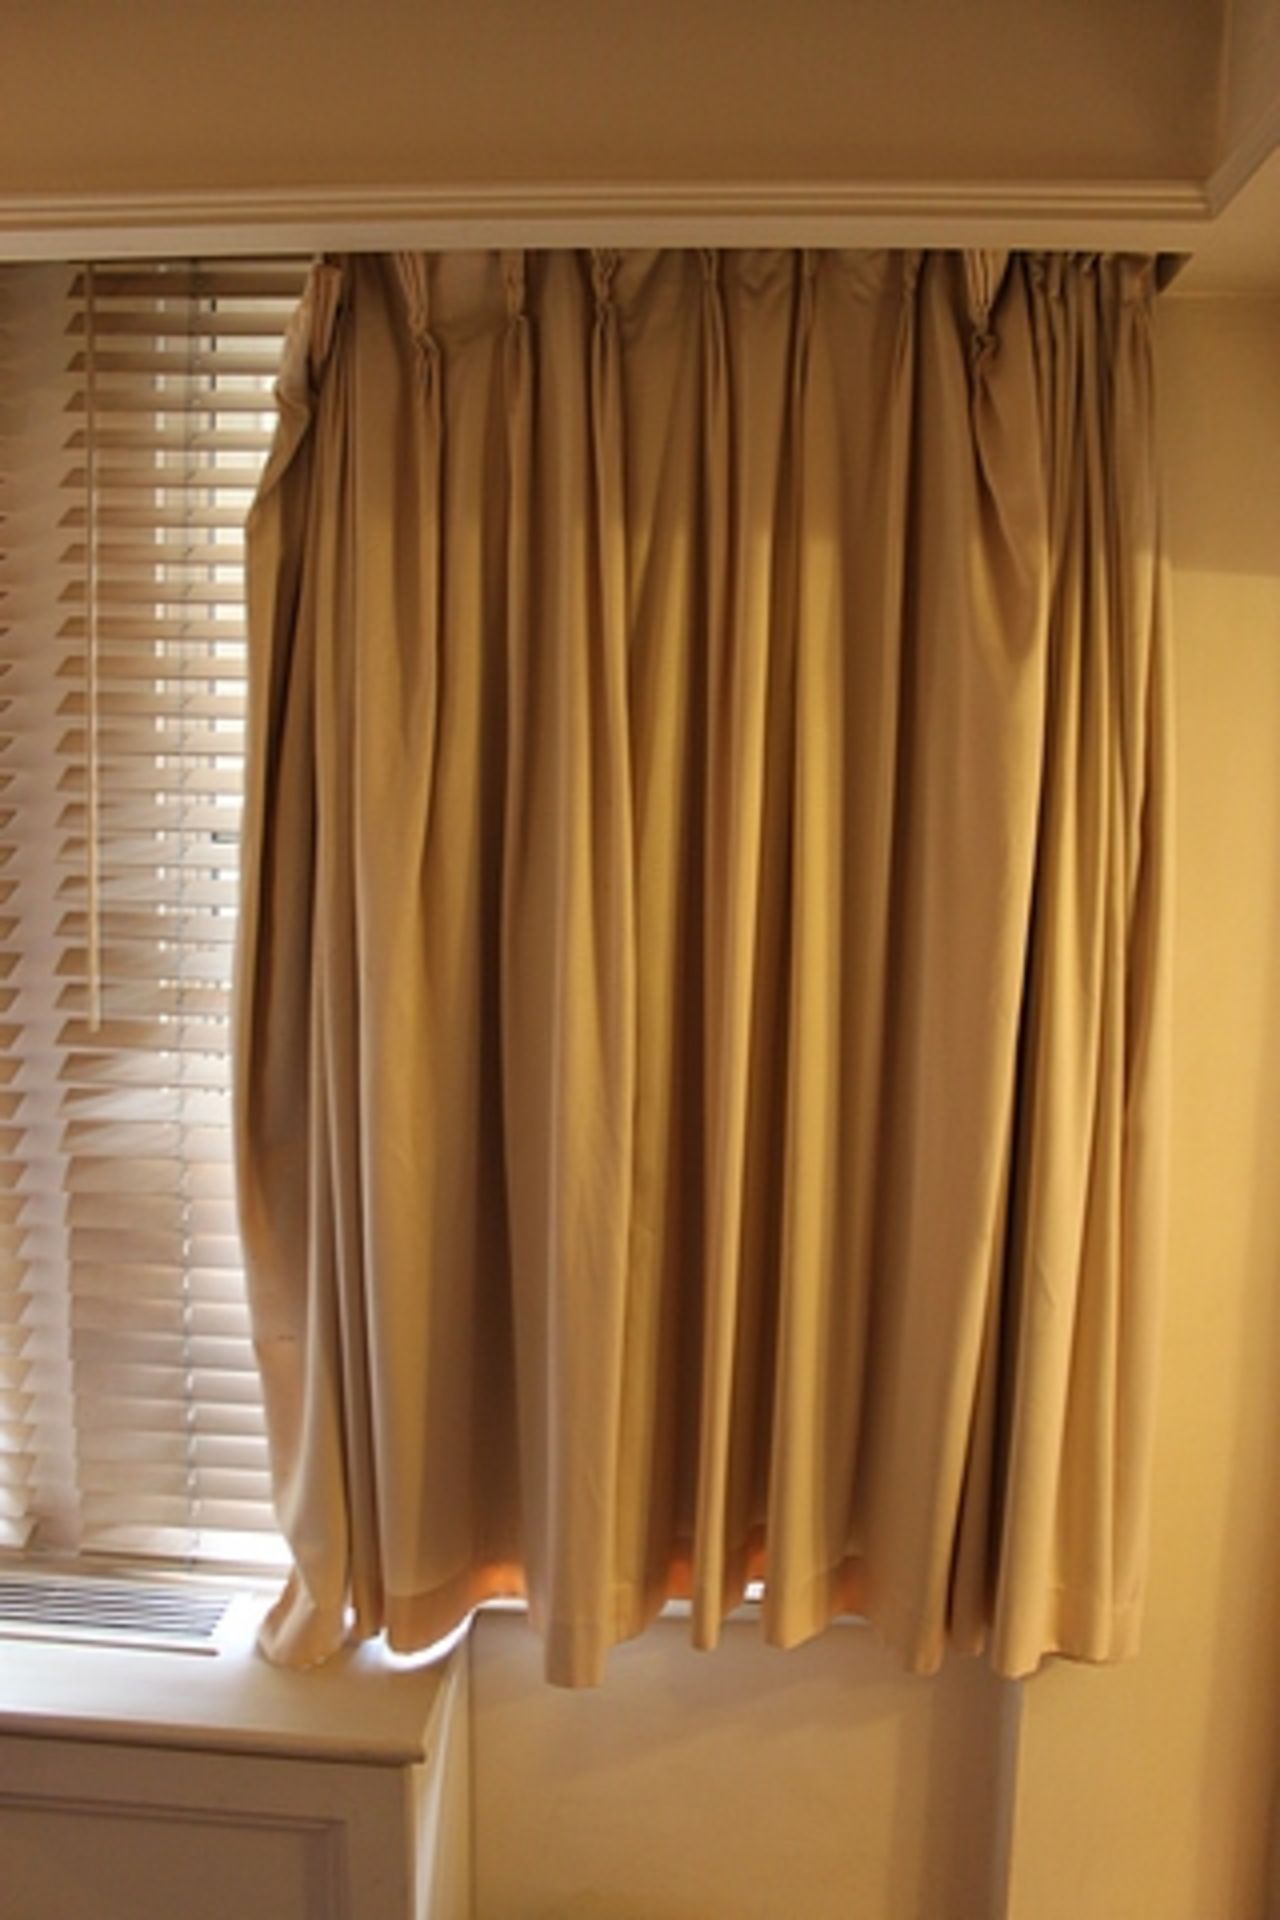 A pair of cream drape curtains spans 2400mm x 1600mm drop